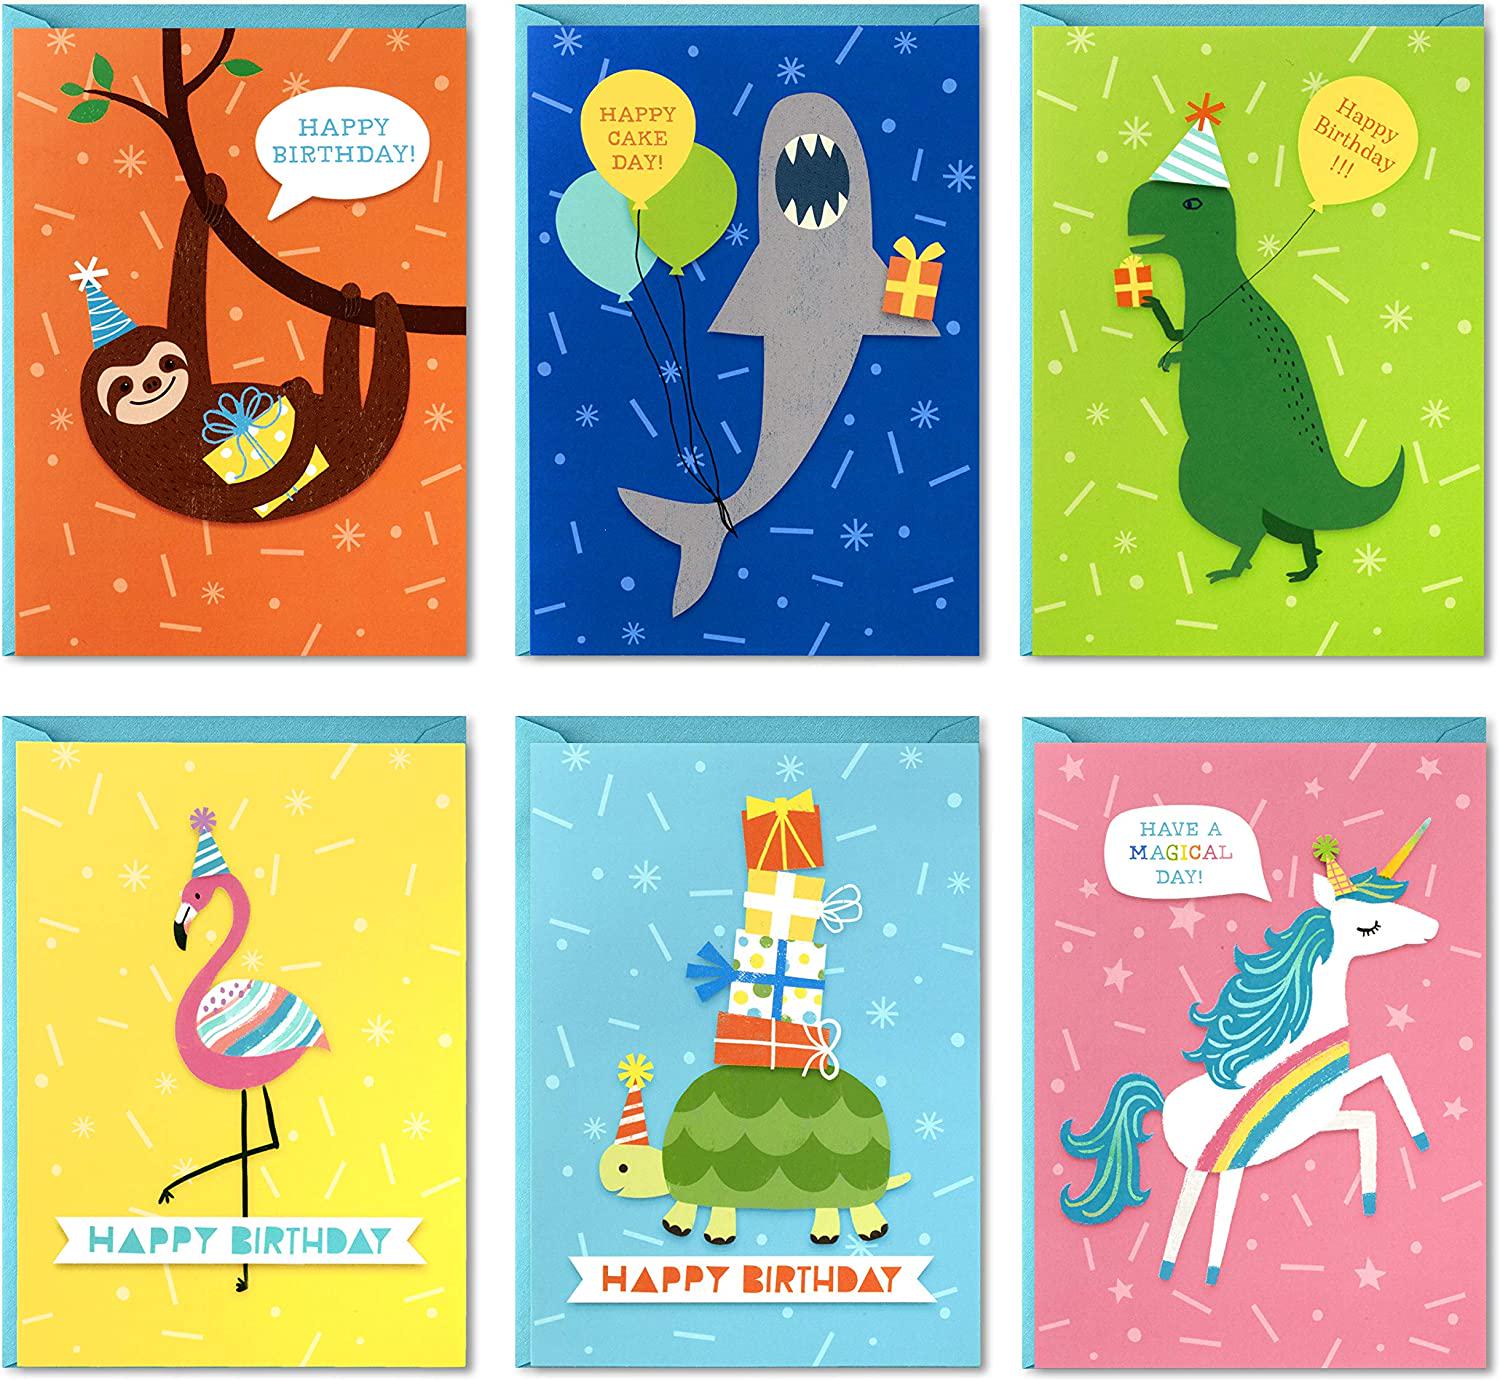 Hallmark, Hallmark Birthday Cards for Kids Assortment, 48 Cards with Envelopes (Dinosaurs, Sloths, Unicorns, Flamingos, Turtles, Sharks)